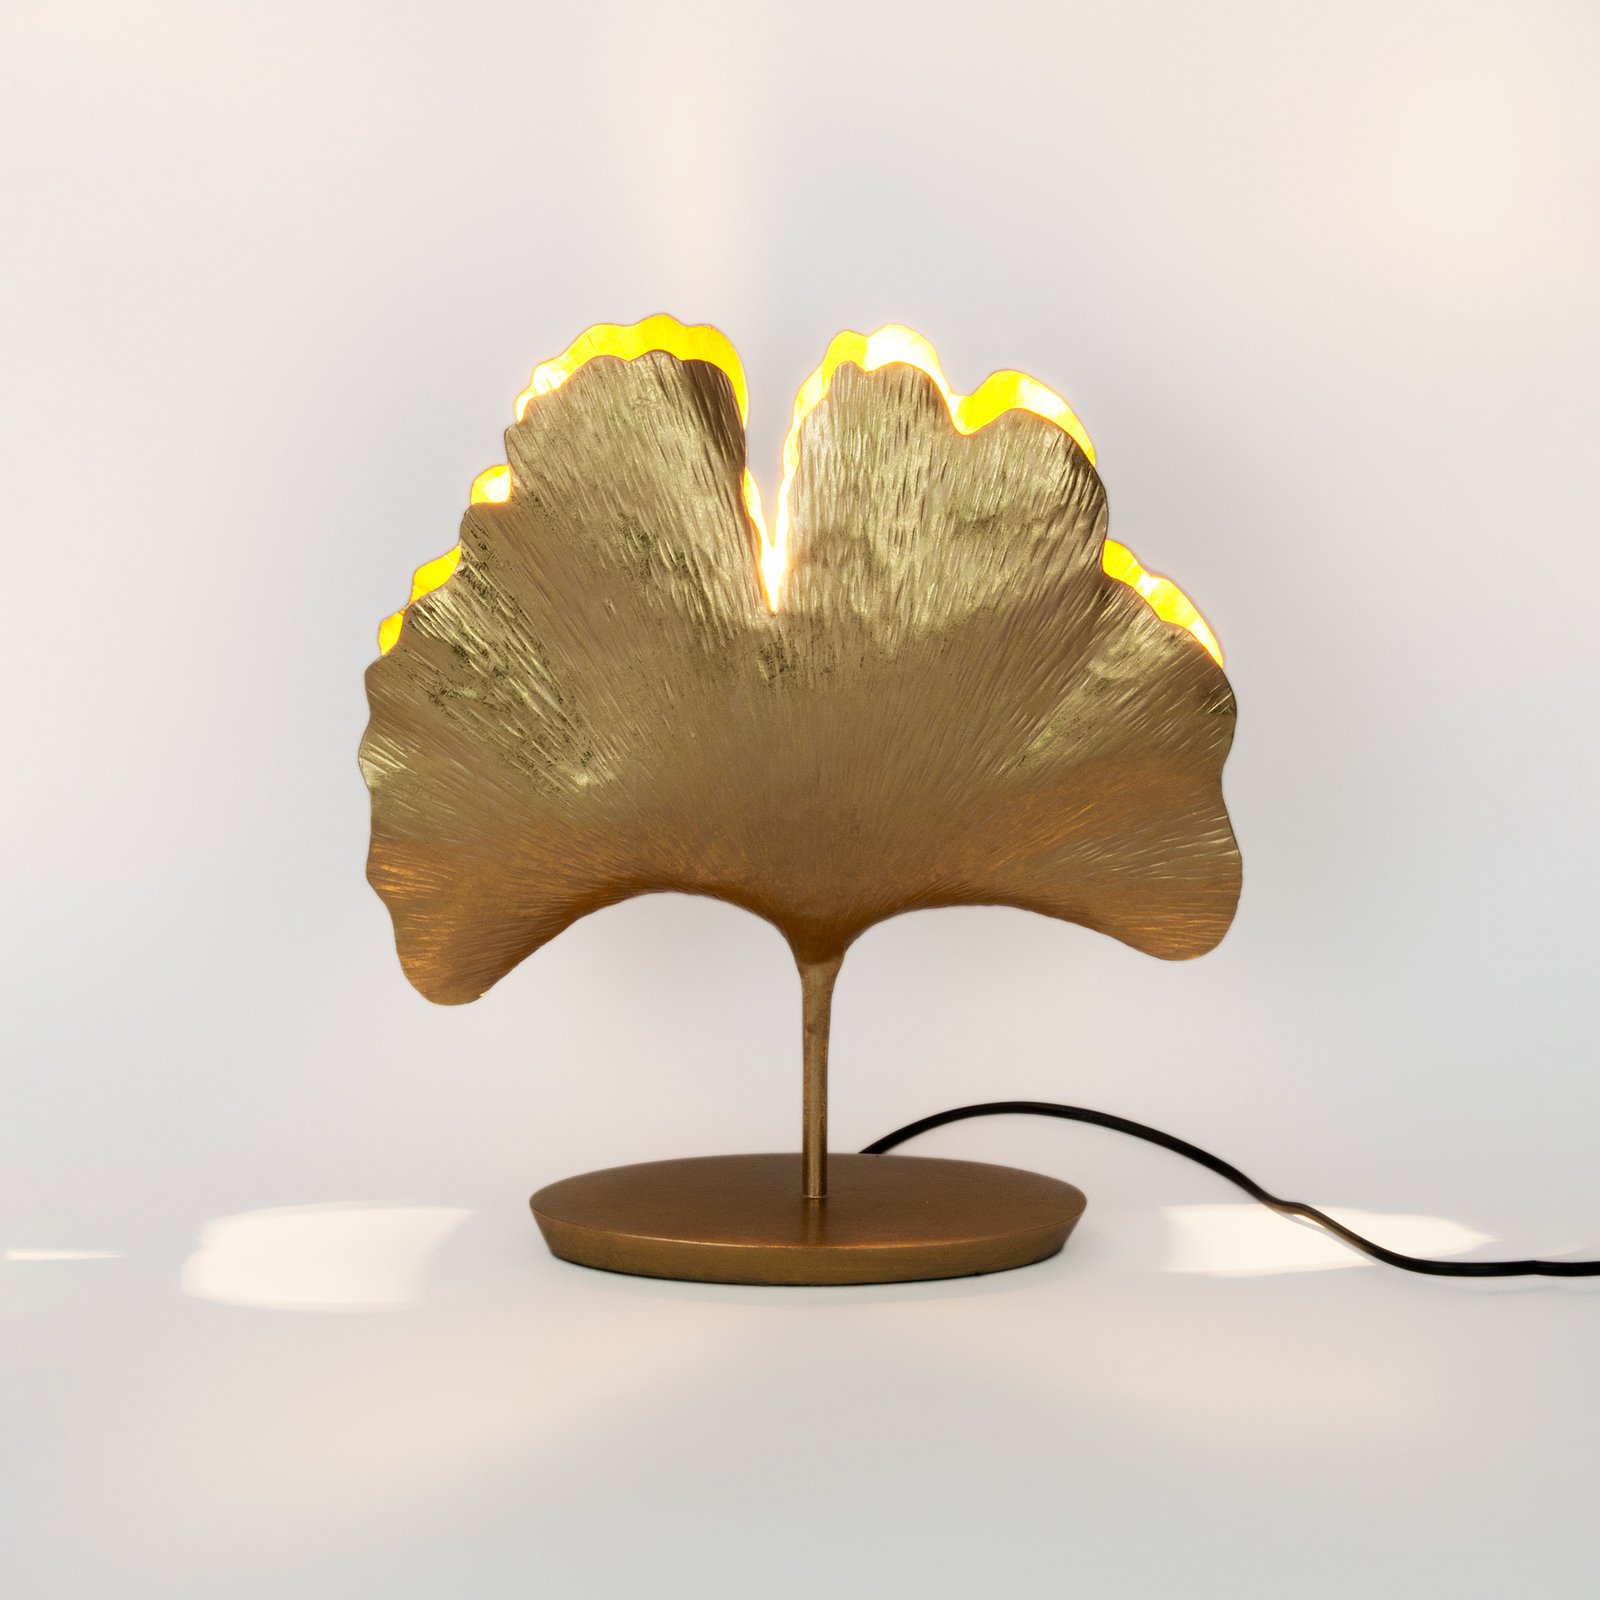 Ginkgo stalinė lempa, aukso spalvos, 36x34cm